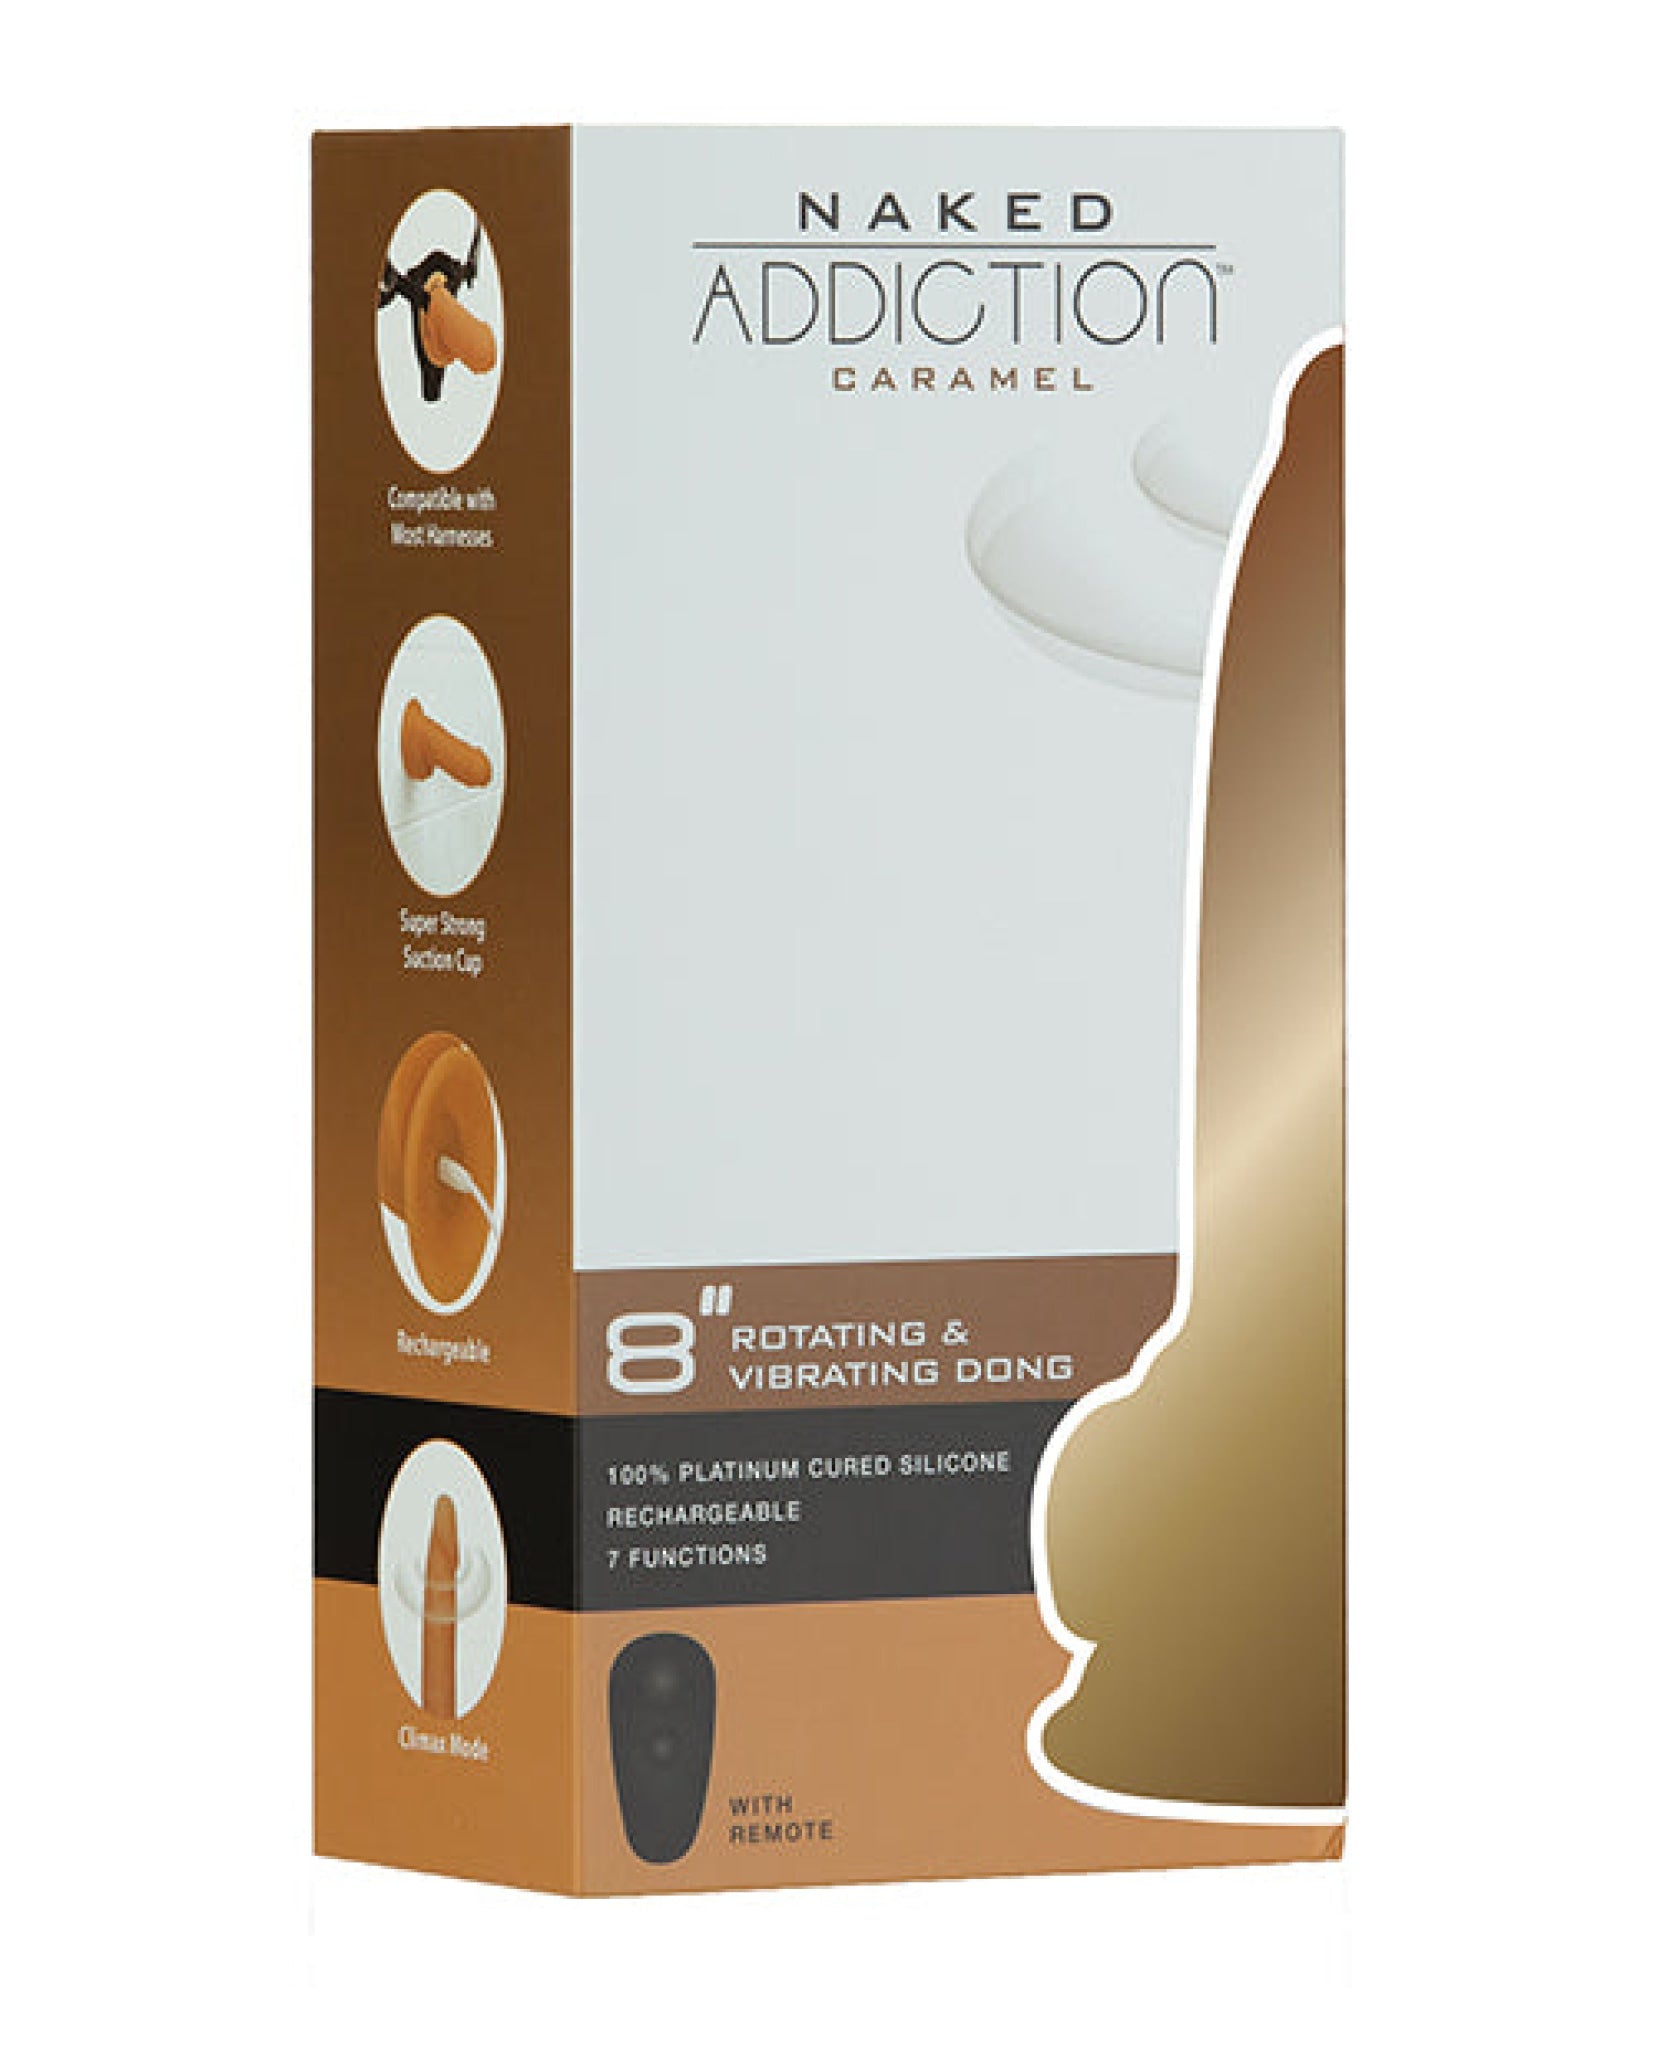 Naked Addiction 8" Dual Density Silicone Dildo - Caramel BMS